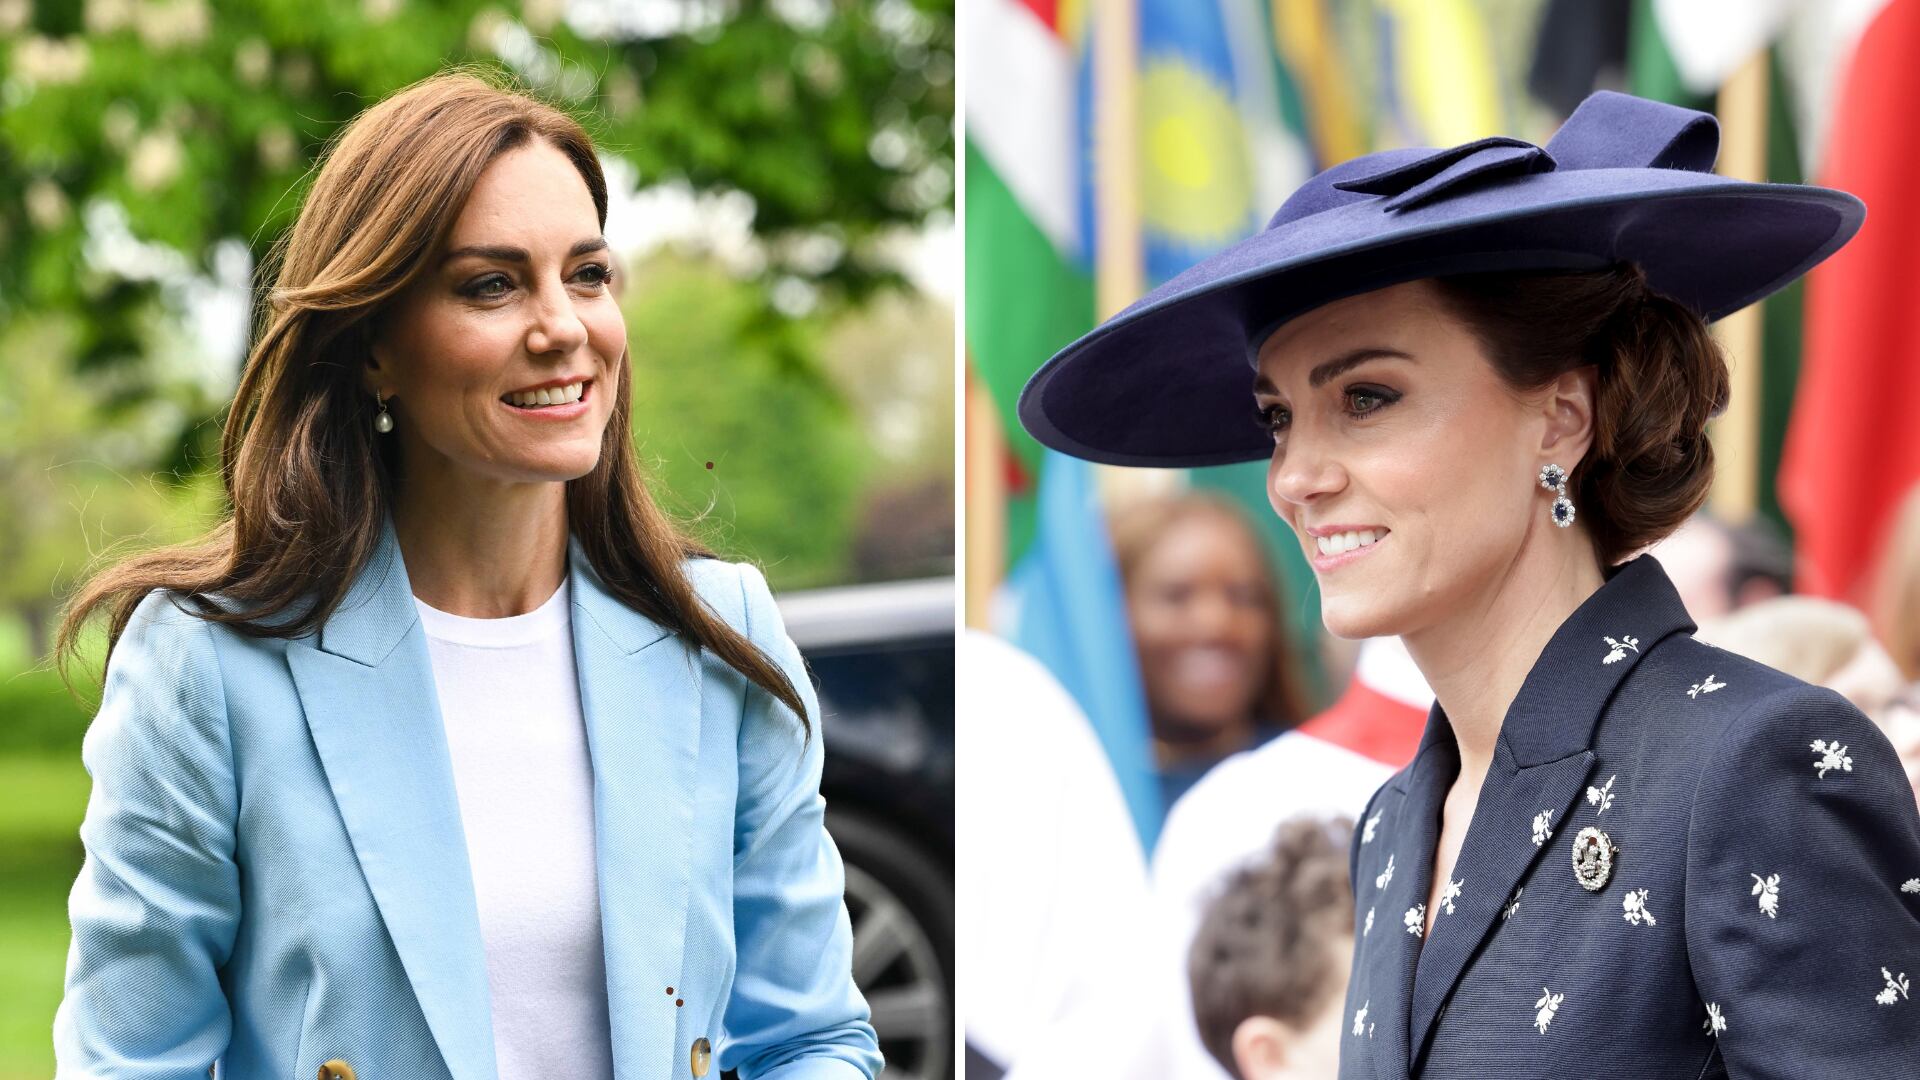 Kate Middleton de nuevo ausente en evento de la realeza. Experta revela cuándo estaria de vuelta.